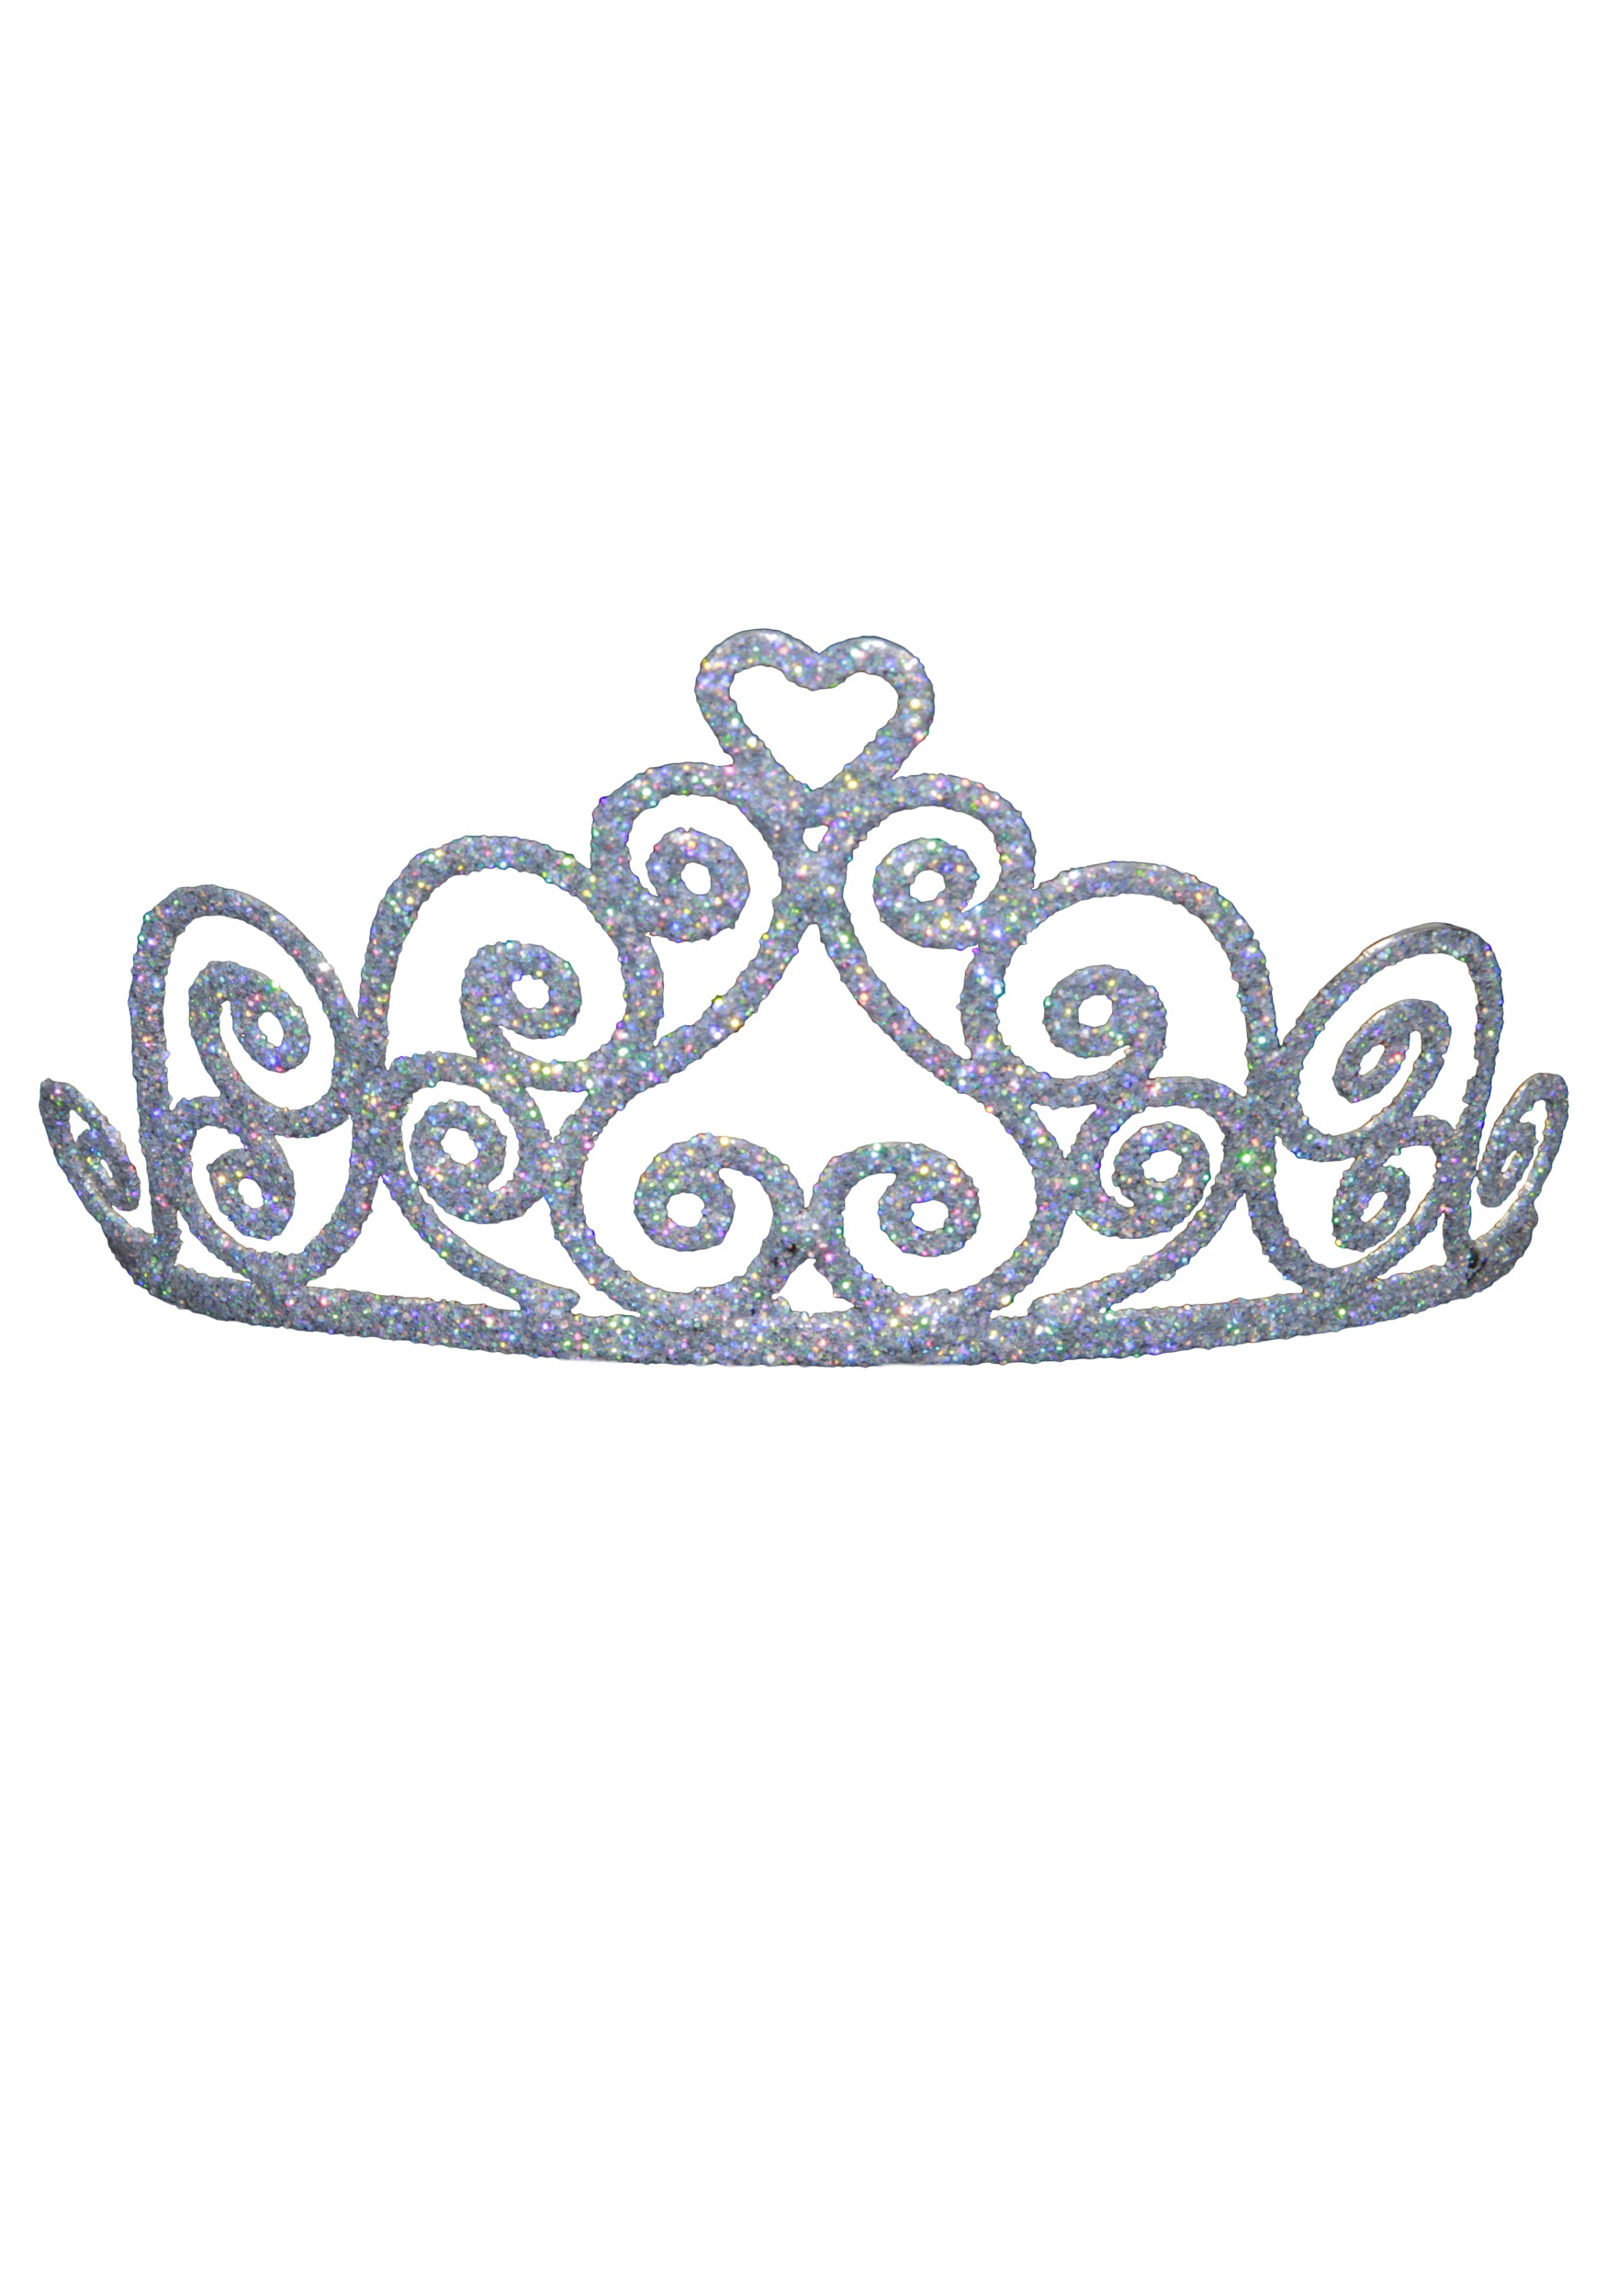 clipart crown cinderella